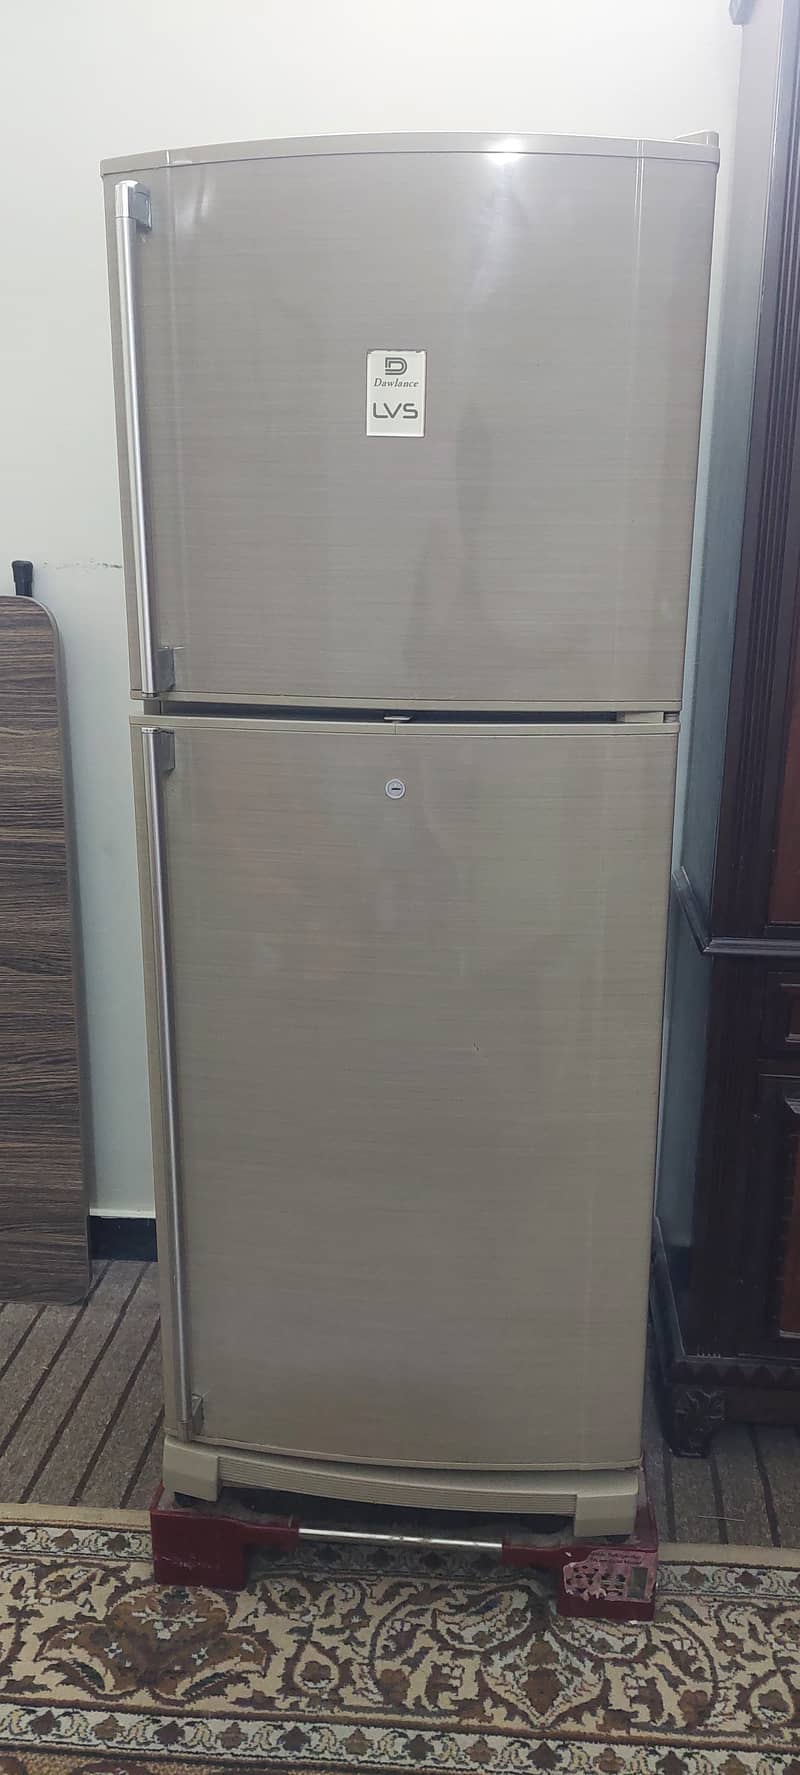 Dawlance Refrigerator 1